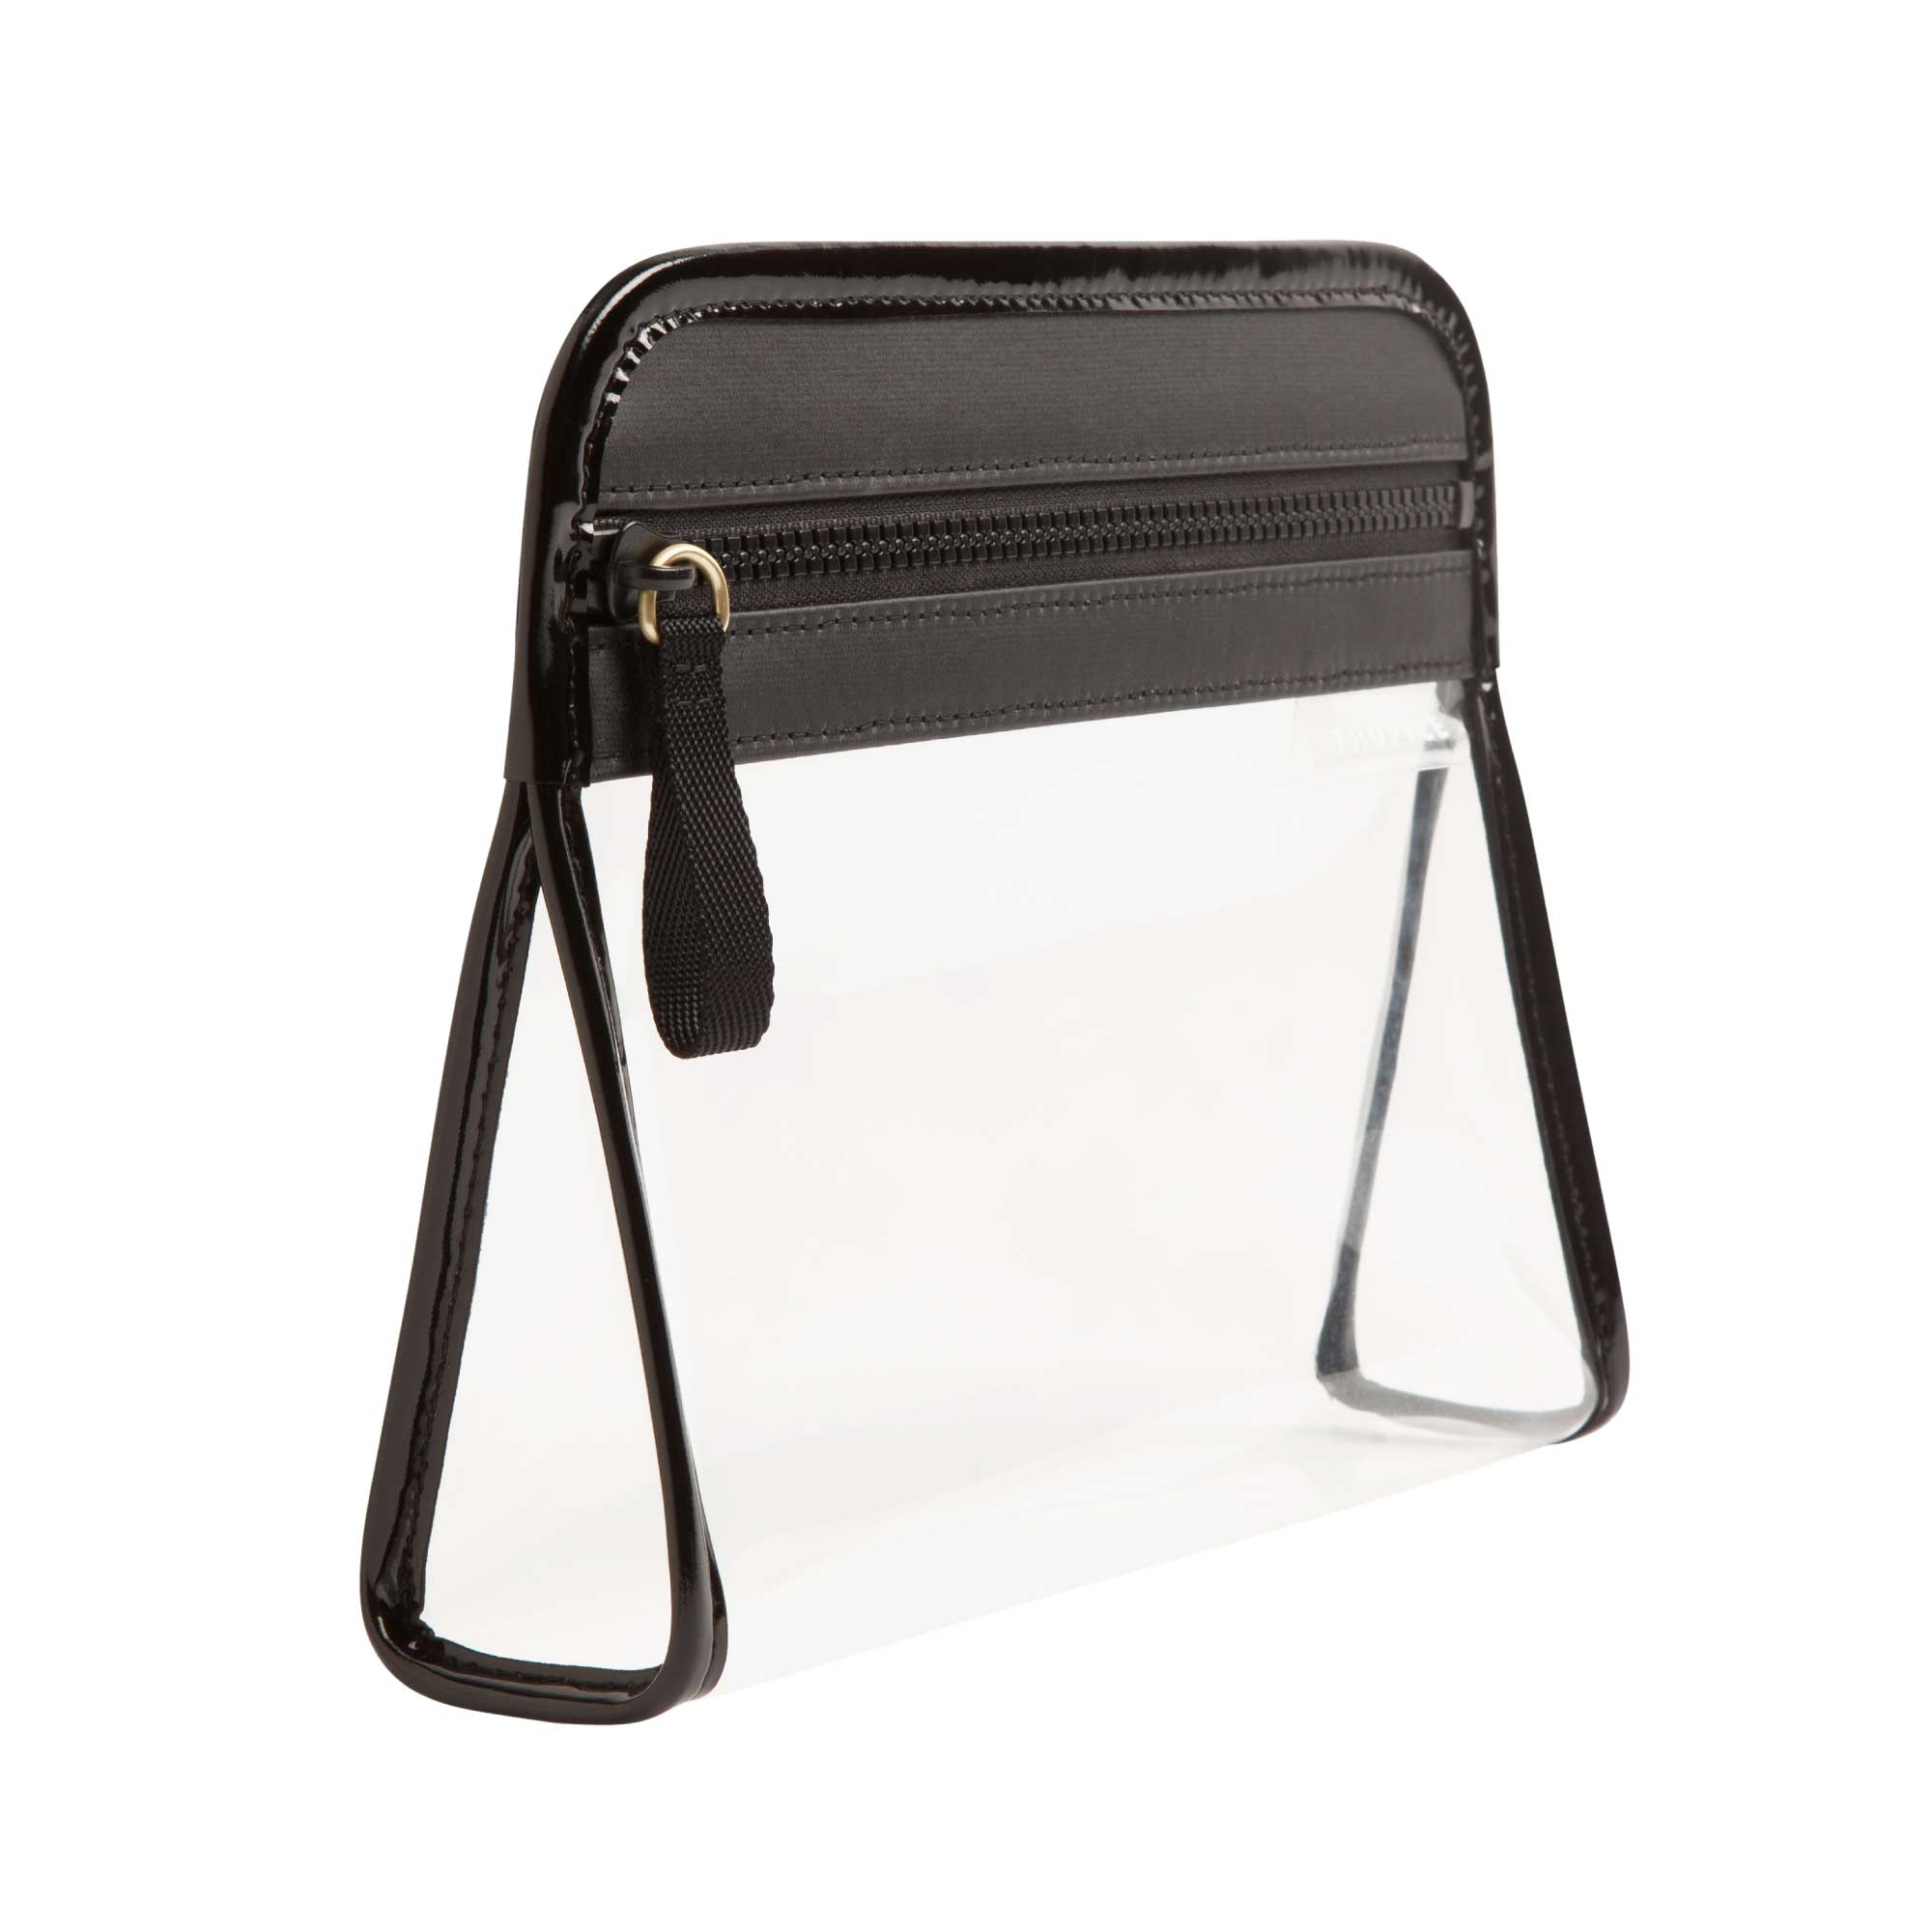 Leather  Cube bag tutorial / pouch / crossbody bag / Box bag